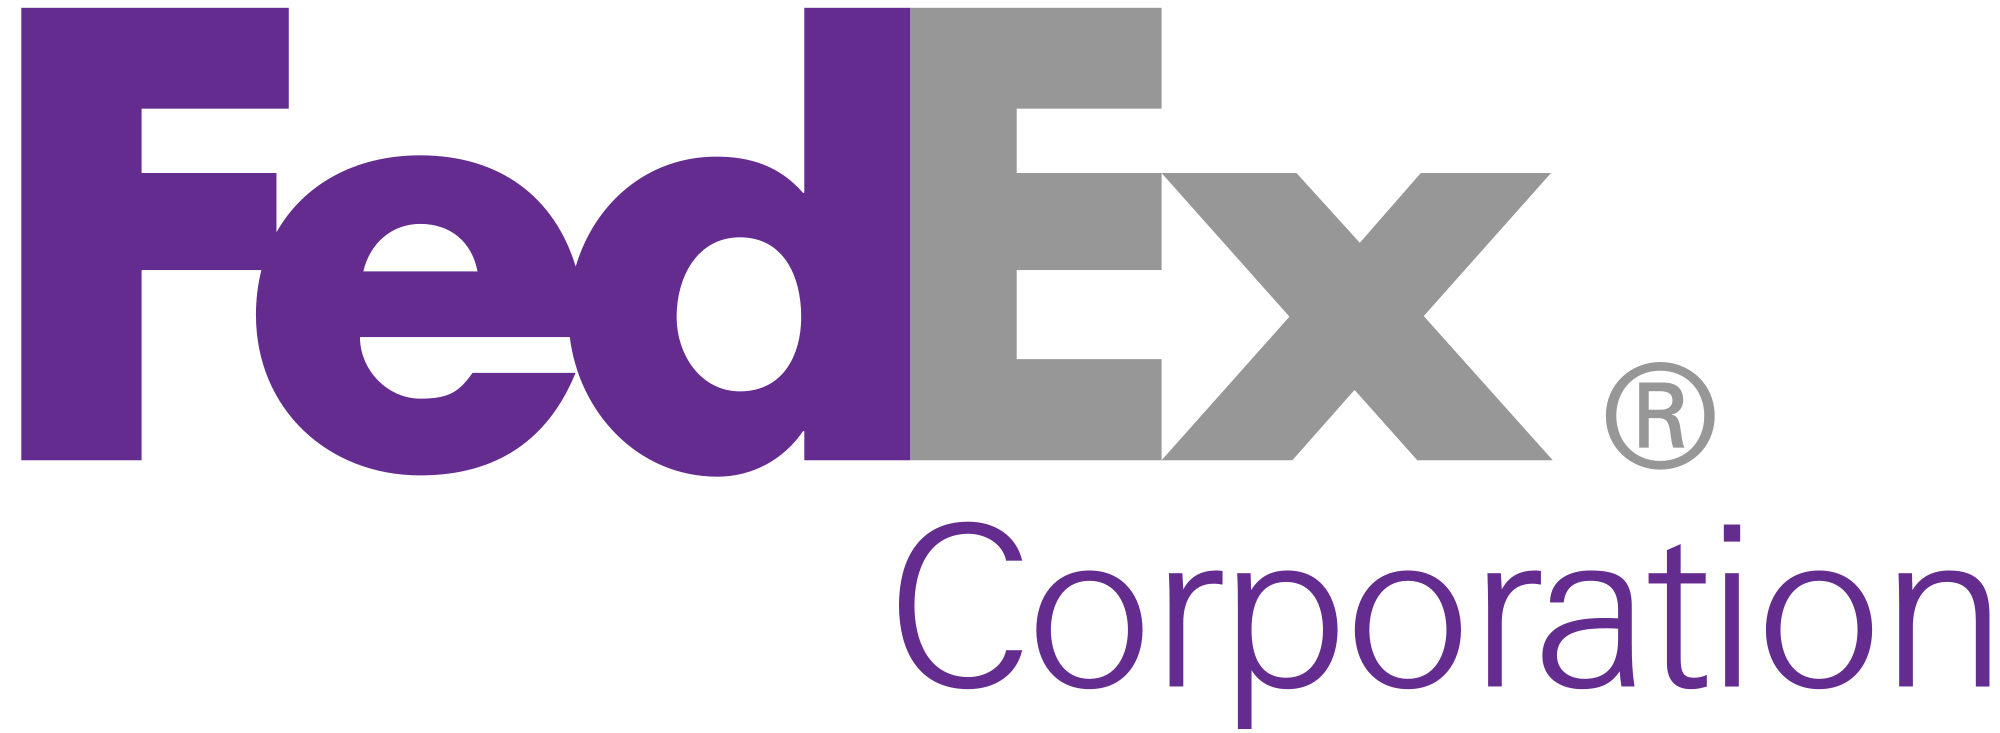 Fedex Office Logo Vector PNG - 109758